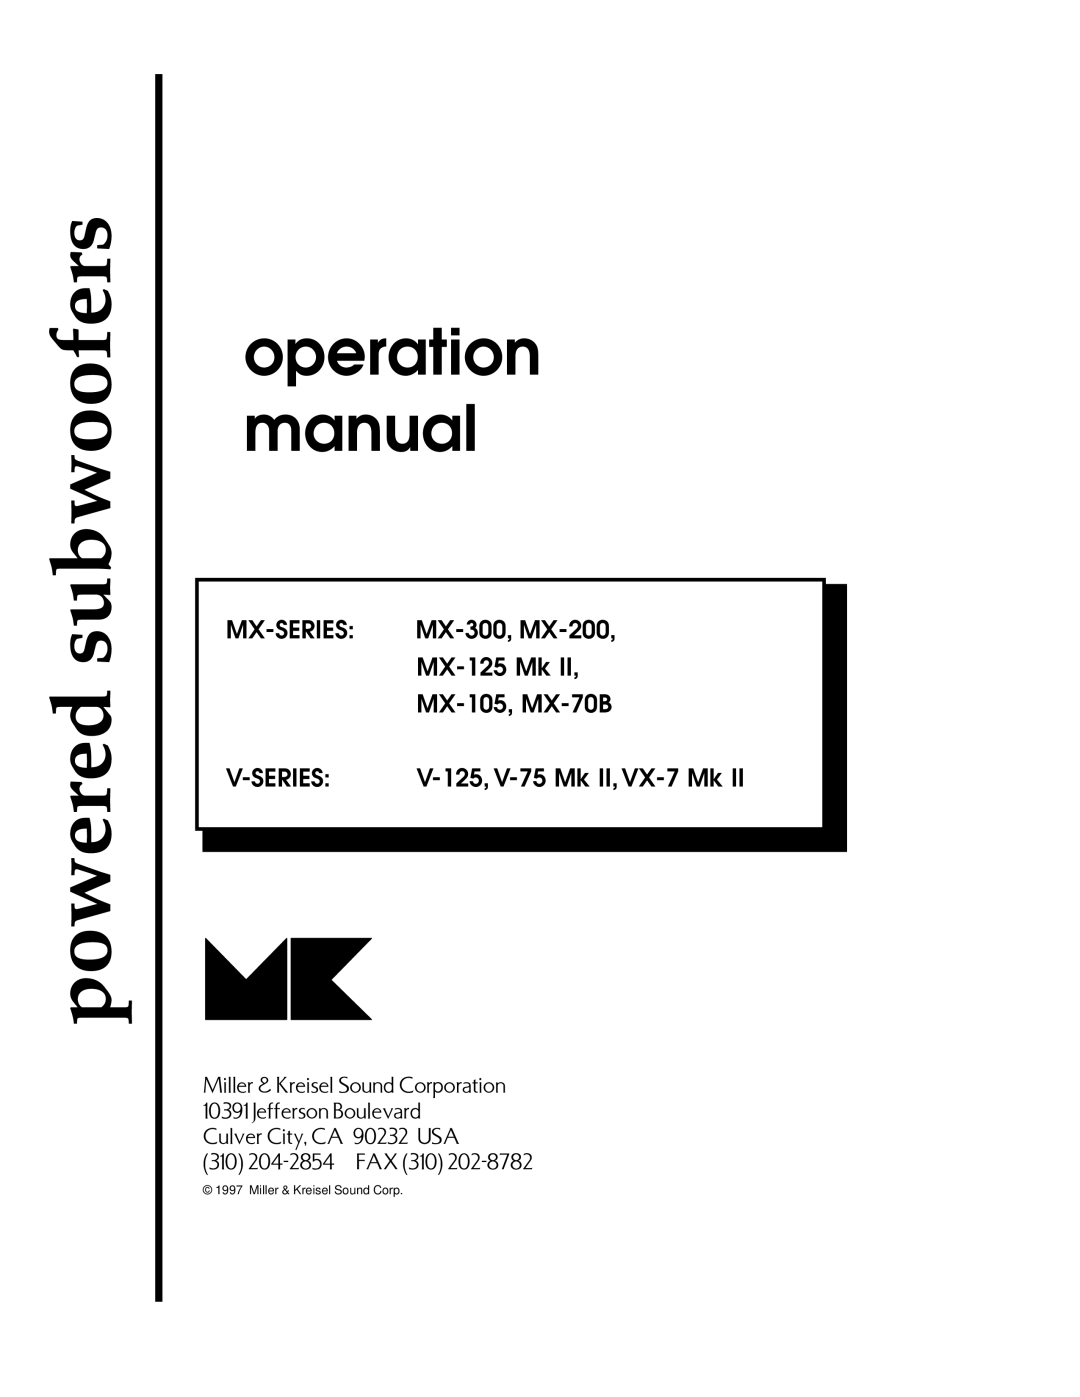 MK Sound operation manual Mx-Series, MX-300, MX-200, MX-125Mk, MX-105, MX-70B, V-Series, V-125, V-75Mk II,VX-7Mk 